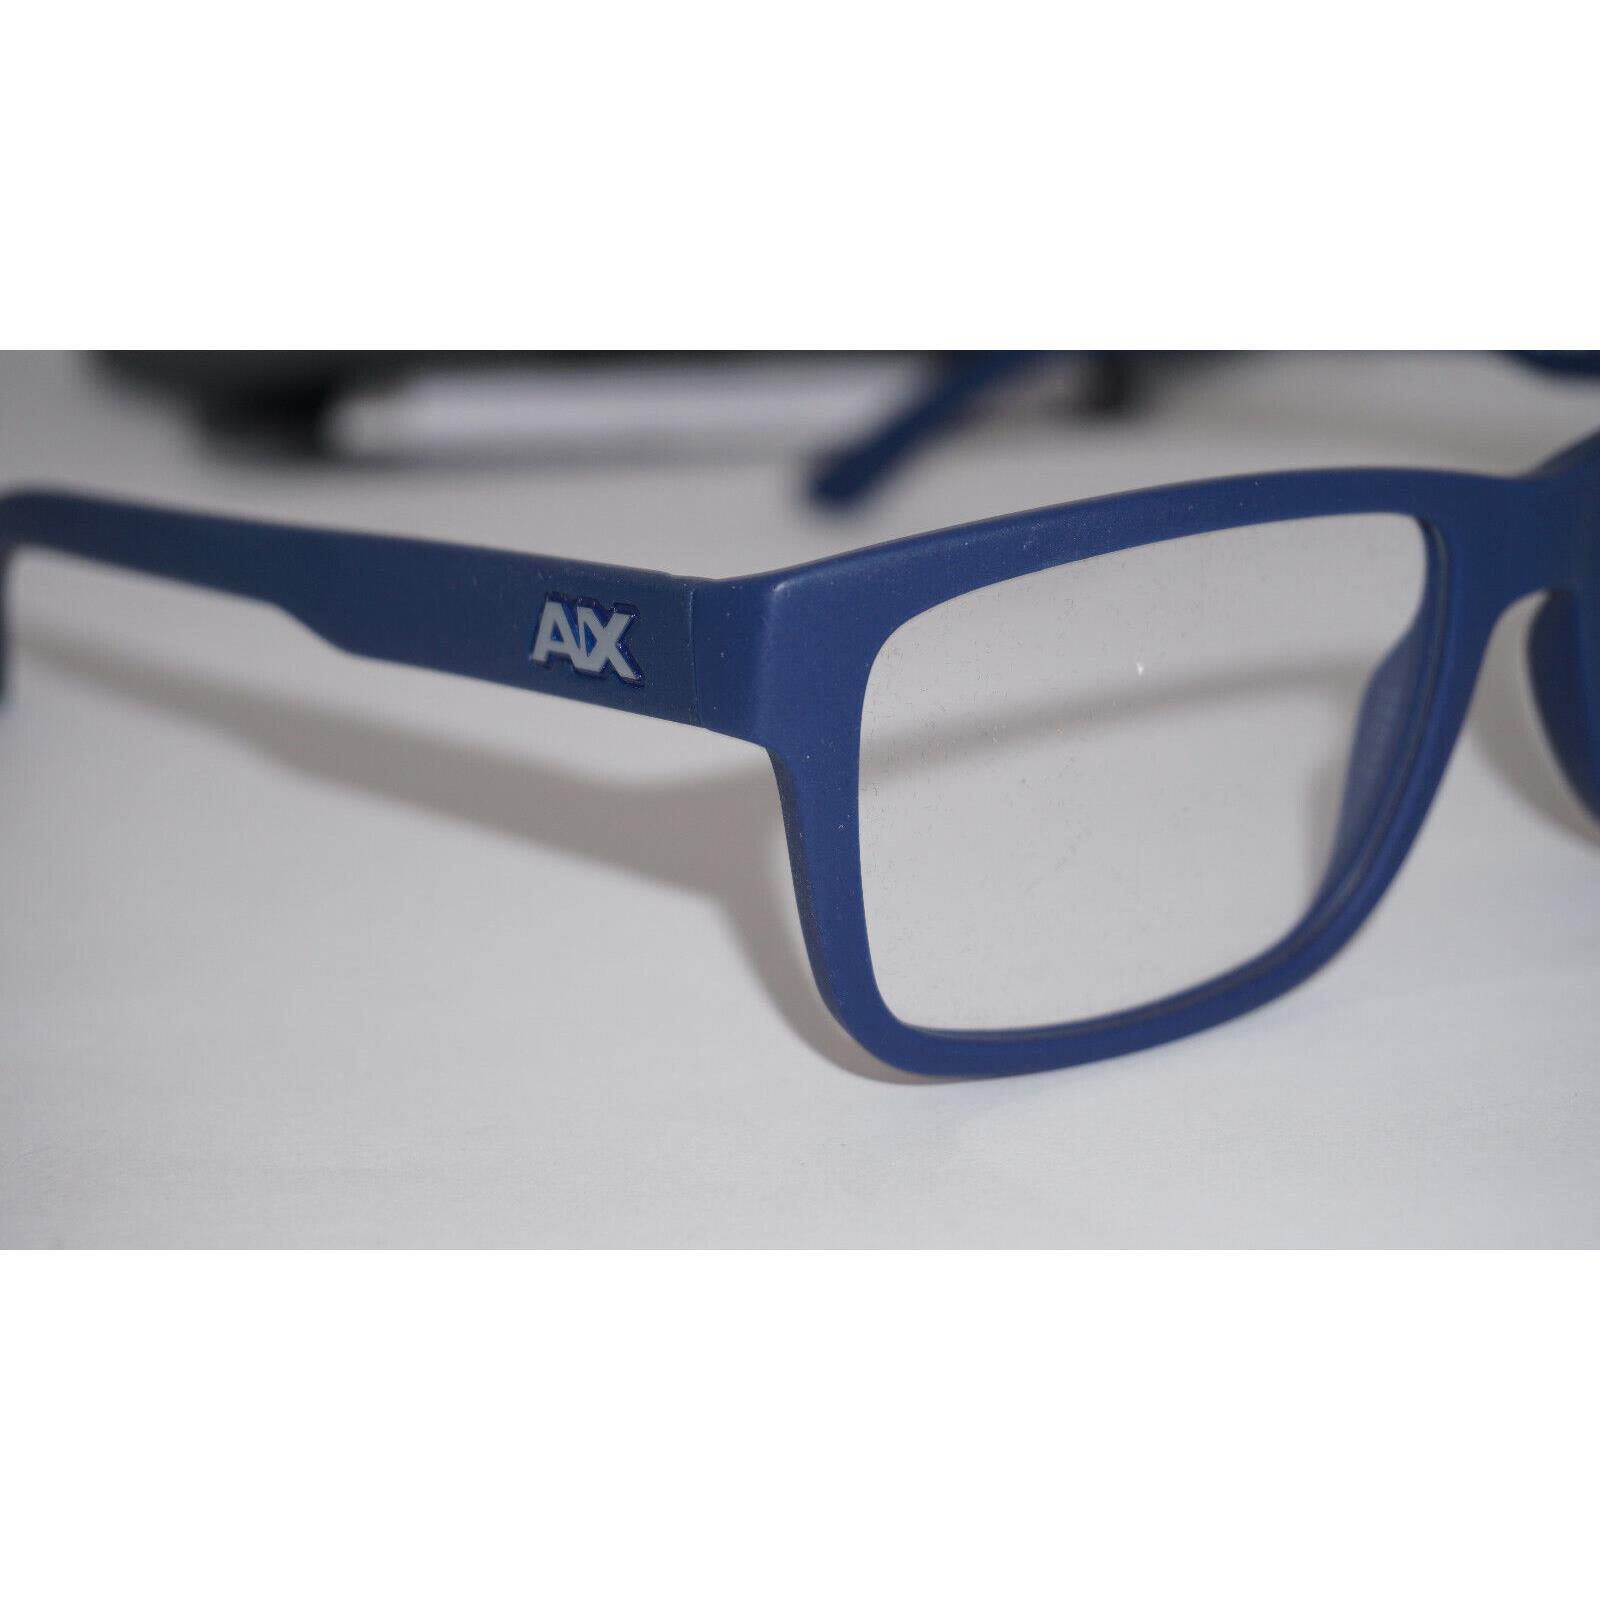 Armani Exchange eyeglasses  - Matte Navy Frame 1